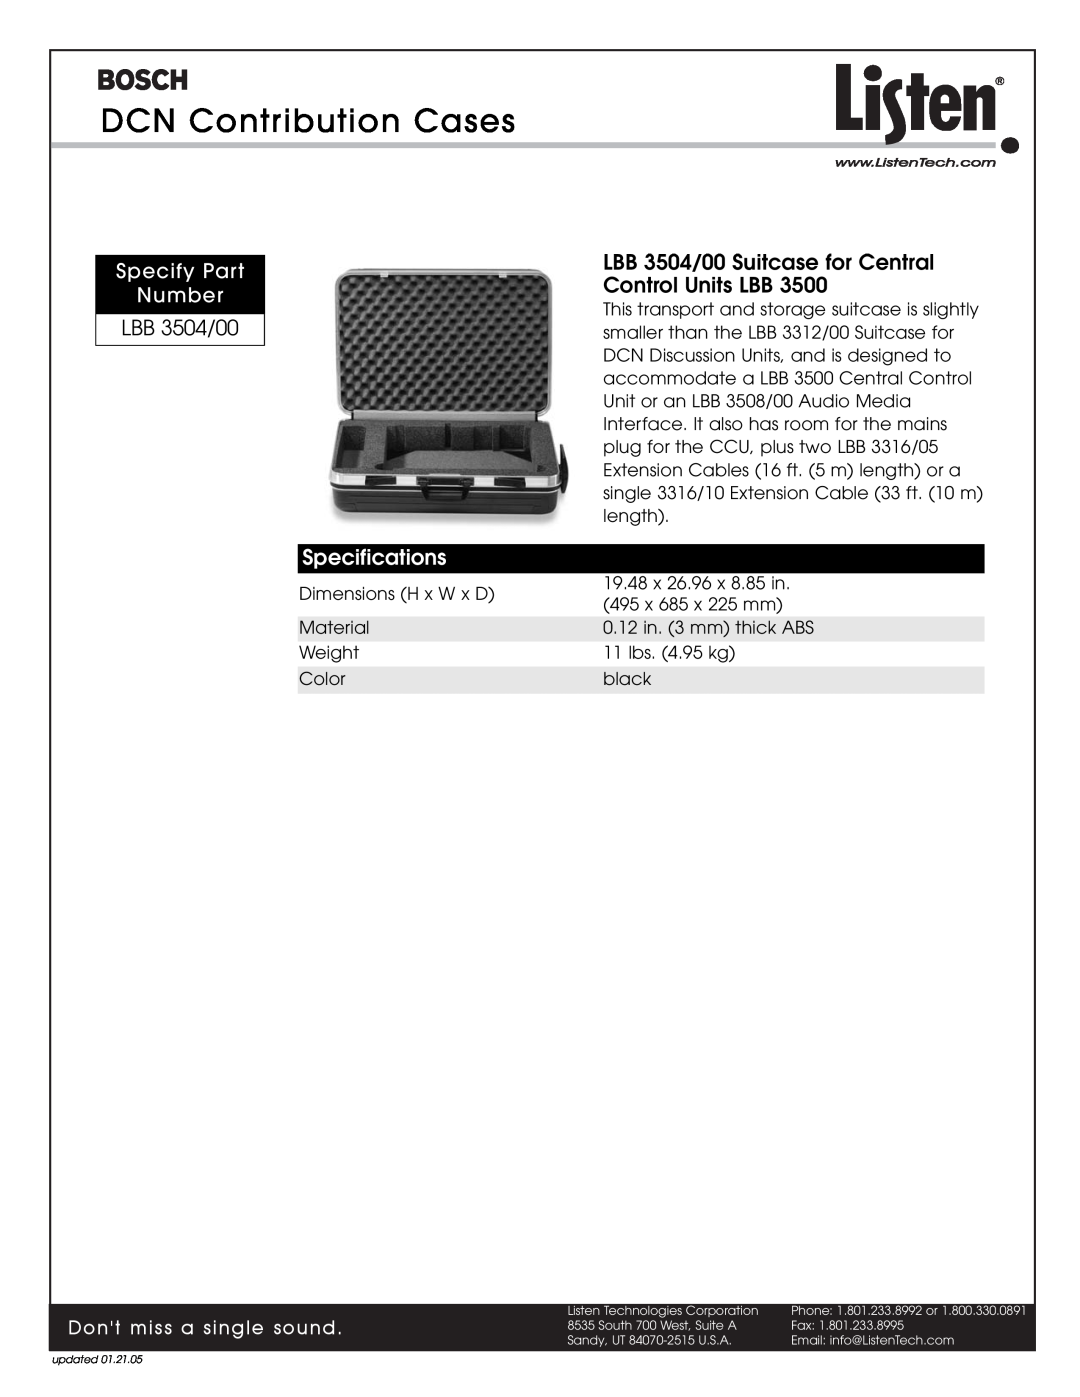 Listen Technologies LA-334 LBB 3504/00 Suitcase for Central, Control Units LBB, DCN Contribution Cases, Specifications 